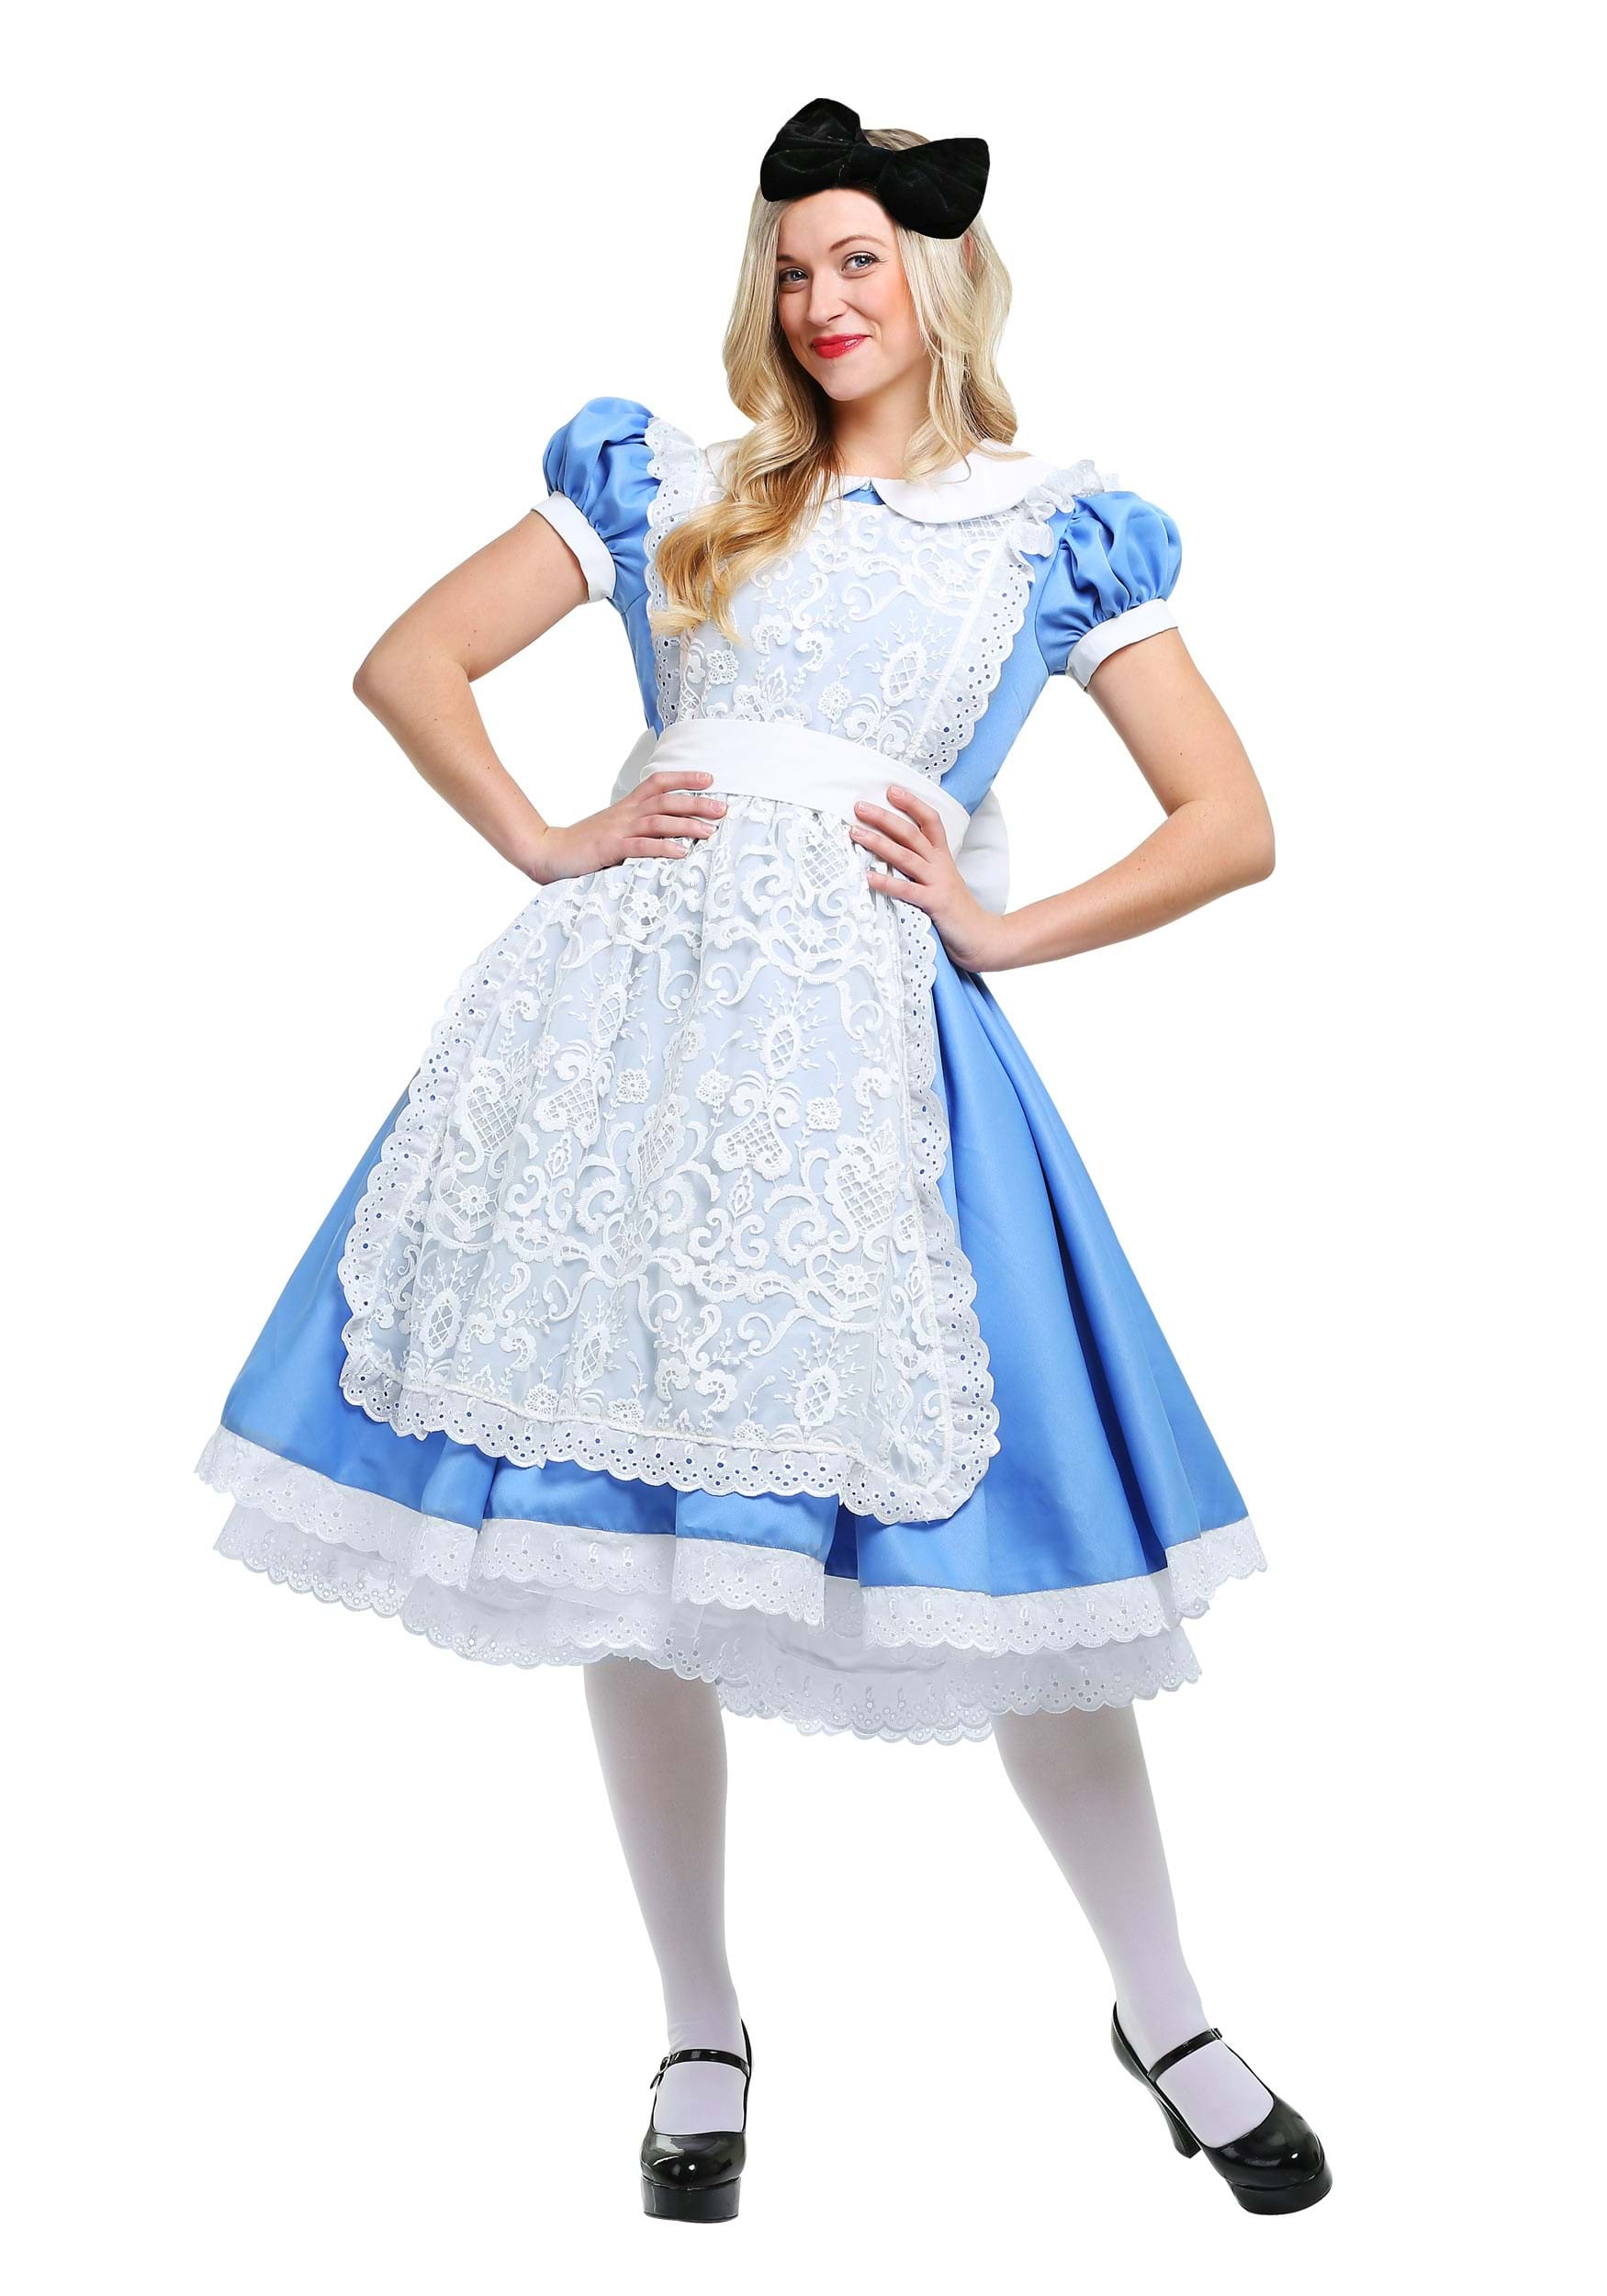 Photos - Fancy Dress Elite FUN Costumes  Alice in Wonderland Women's Costume Blue/White FUN6 